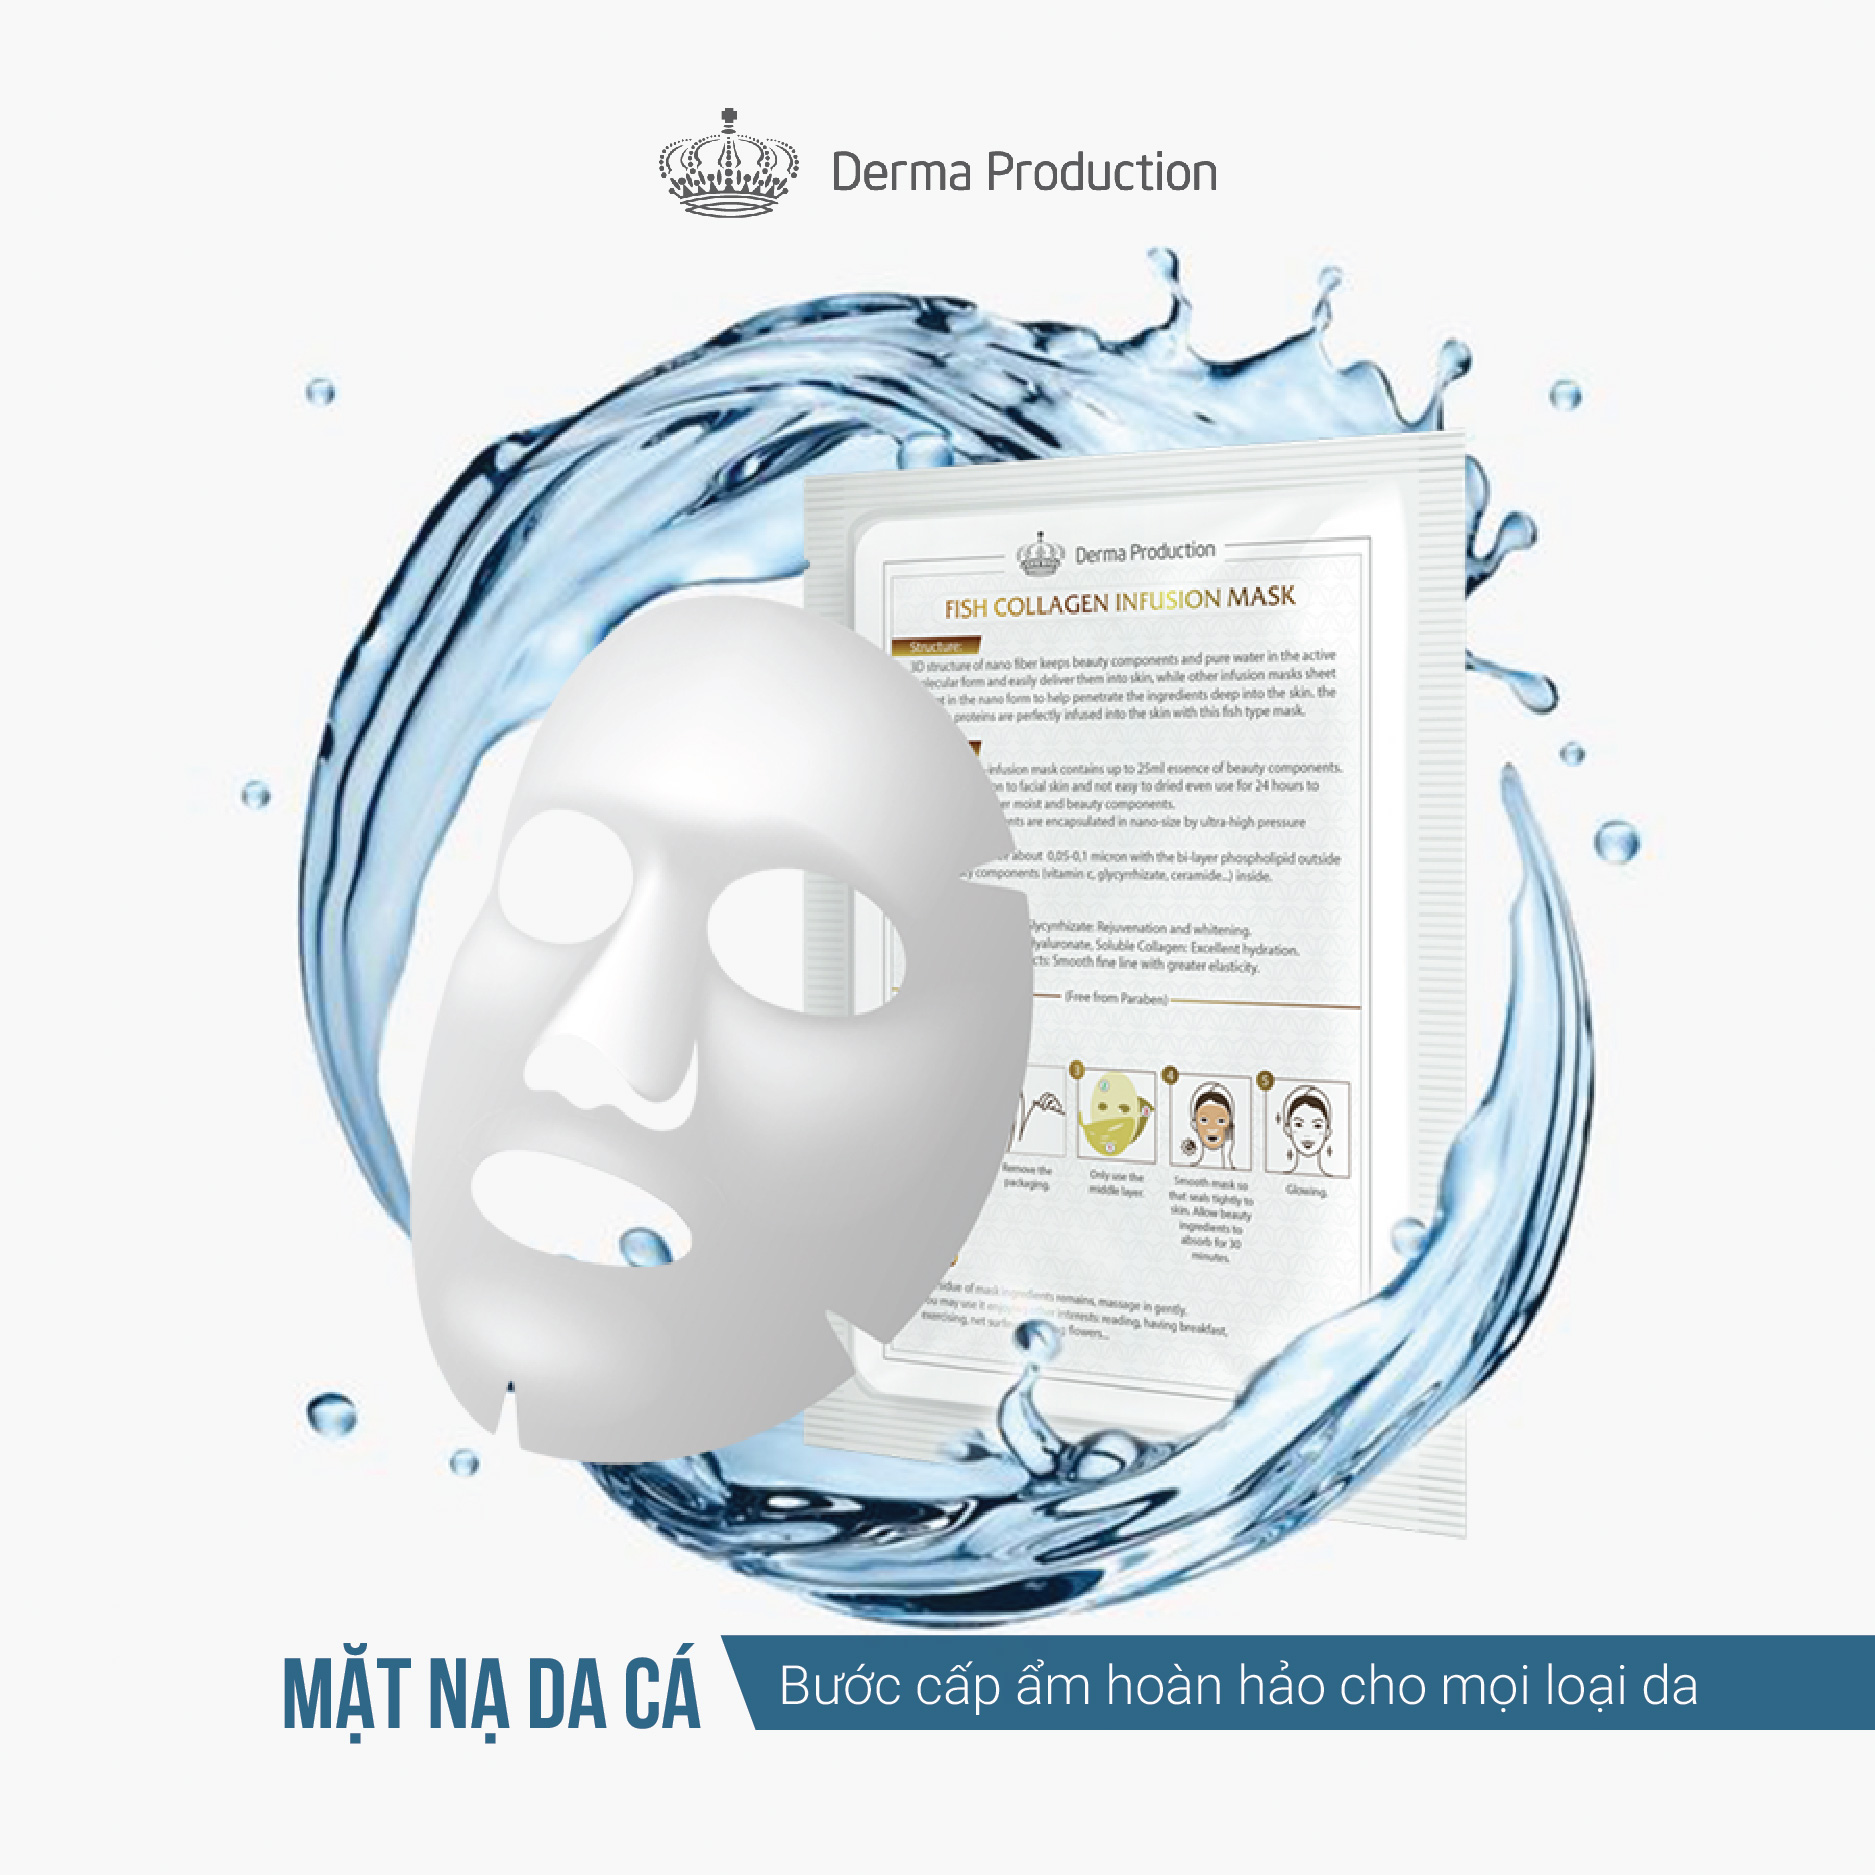 Derma Fish Collagen Infusion Mask cấp nước cho da